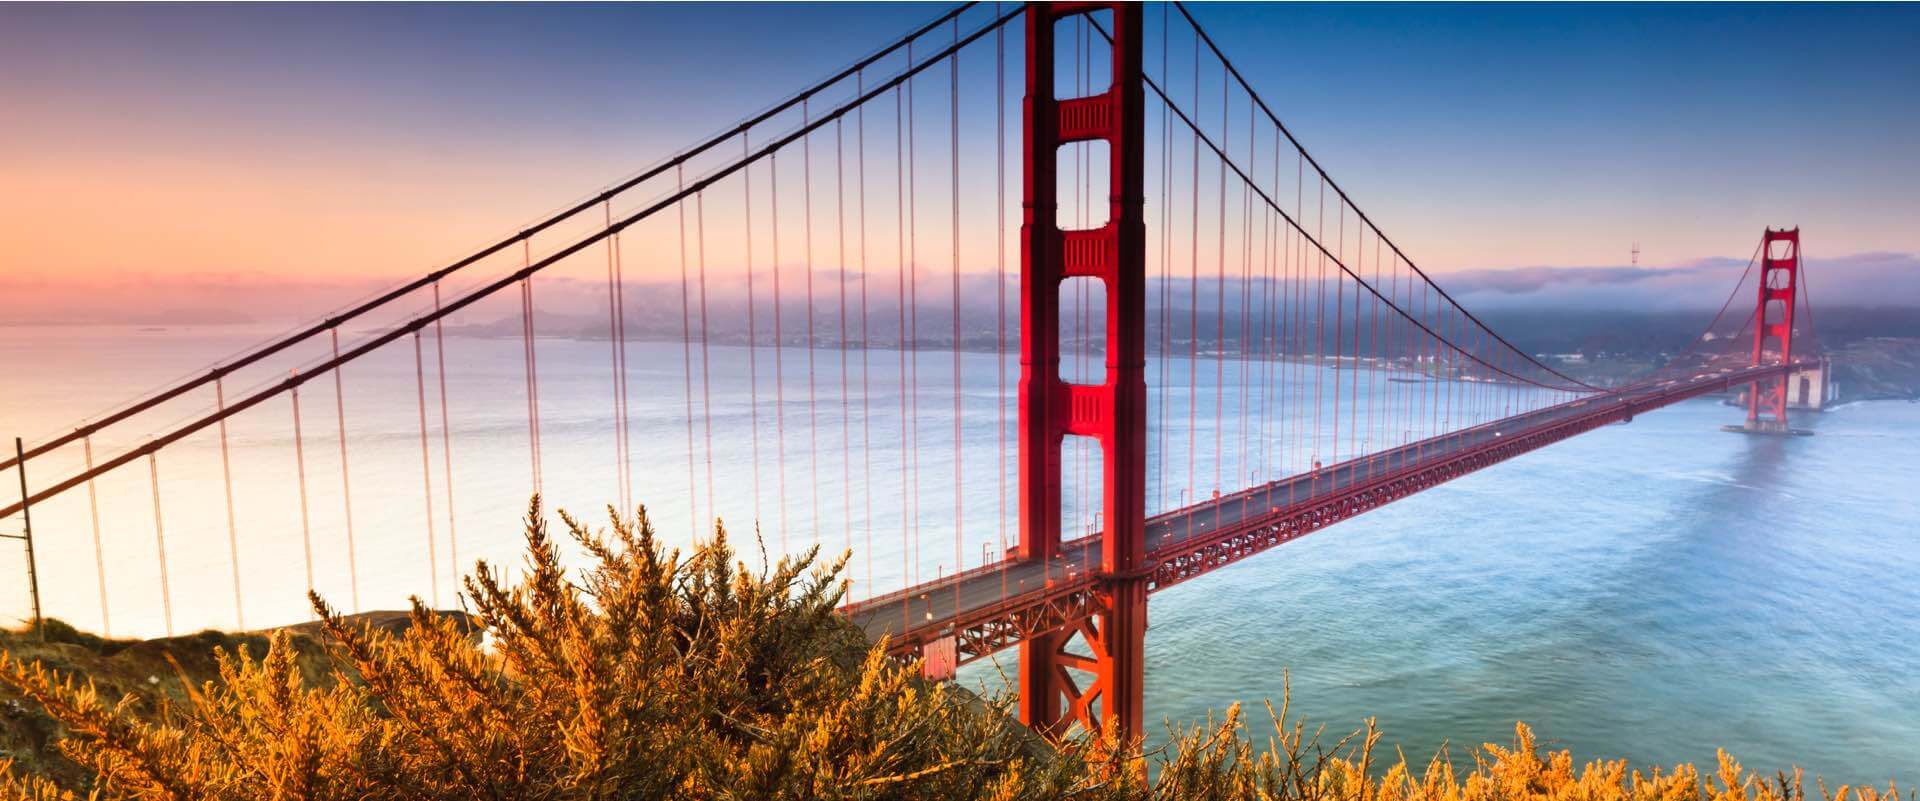 Сан франциско какой. Мост «золотые ворота» (Сан-Франциско, США). Голден гейт Сан Франциско. Мост золотые ворота Сан-Франциско Калифорния. МГСТ голдан геидс Сан Франциско.